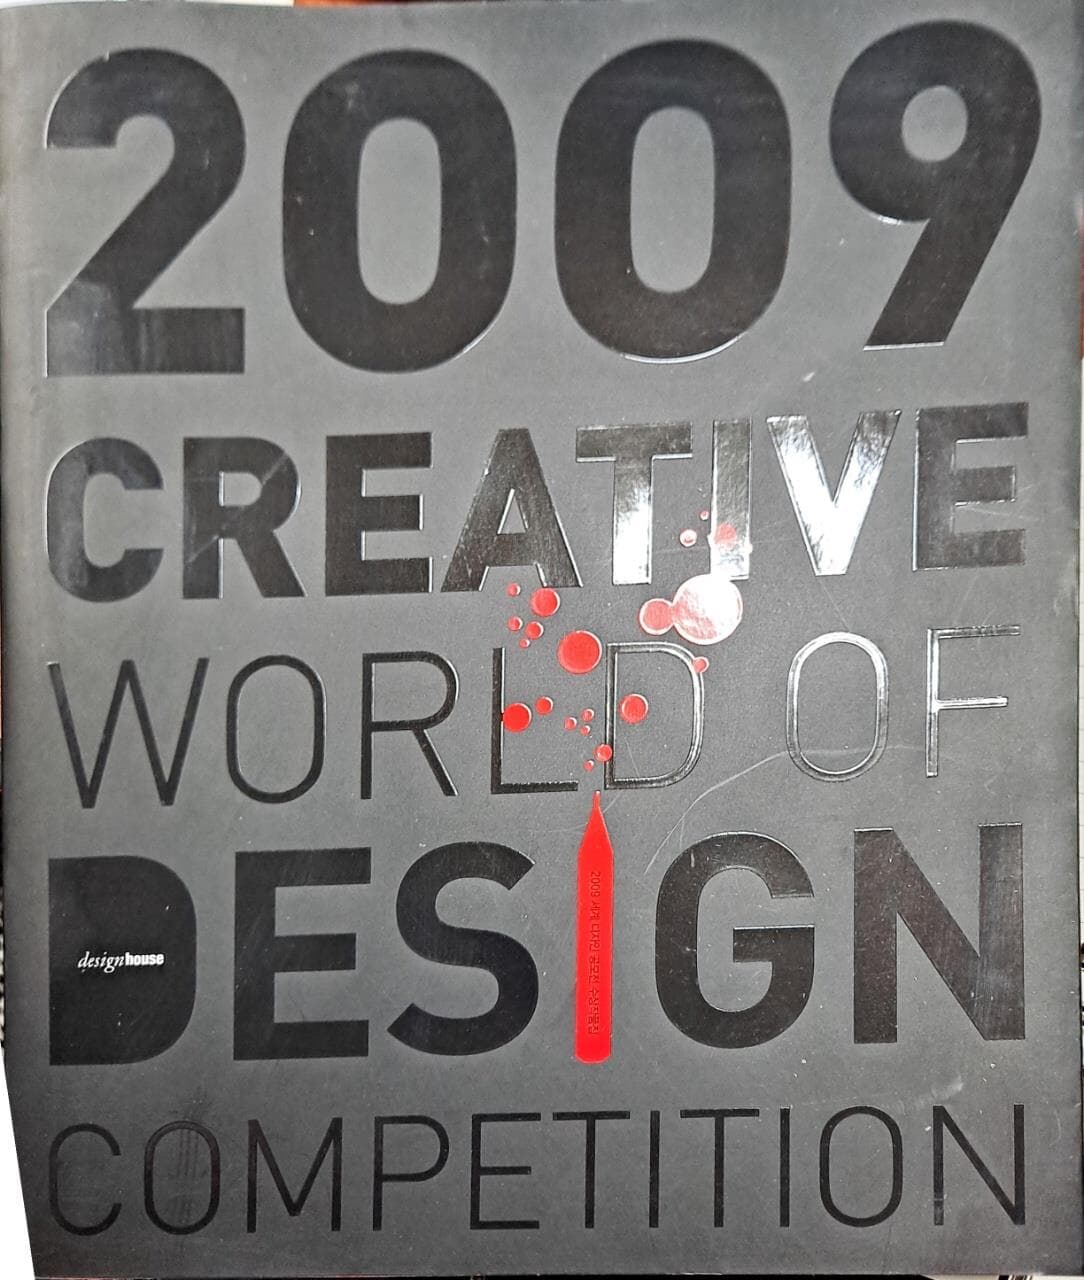 2009 creative world of design competition - 2009  세계 디자인 공모전 수상작품집